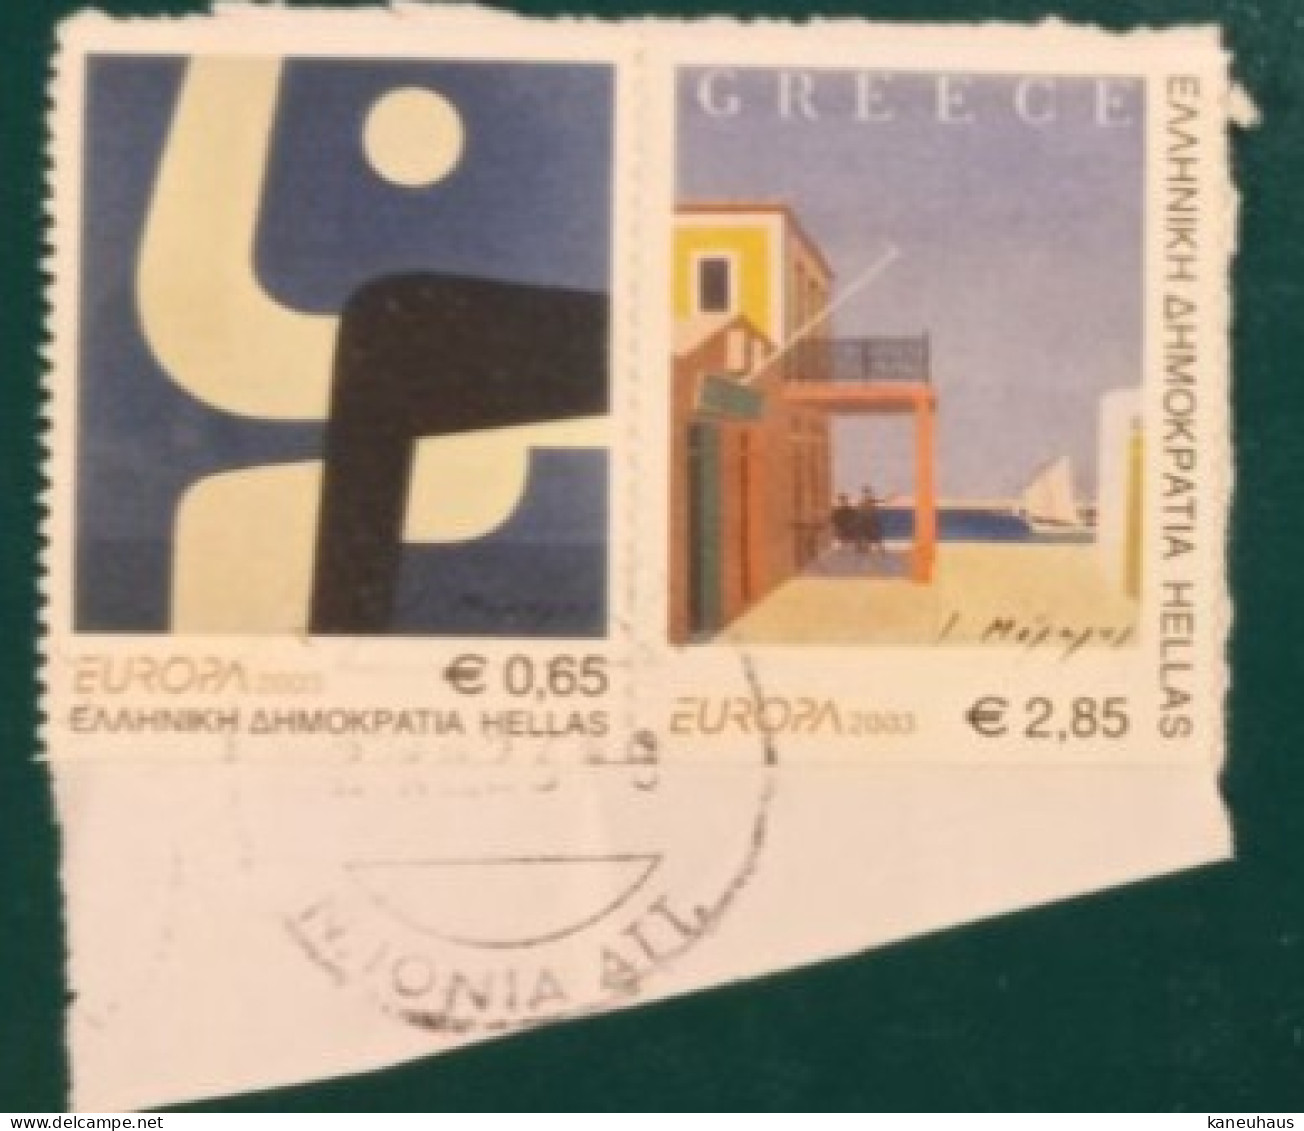 2003 Michel Nr. 2150/2151C Waagerechtes Paar Gestempelt - Used Stamps